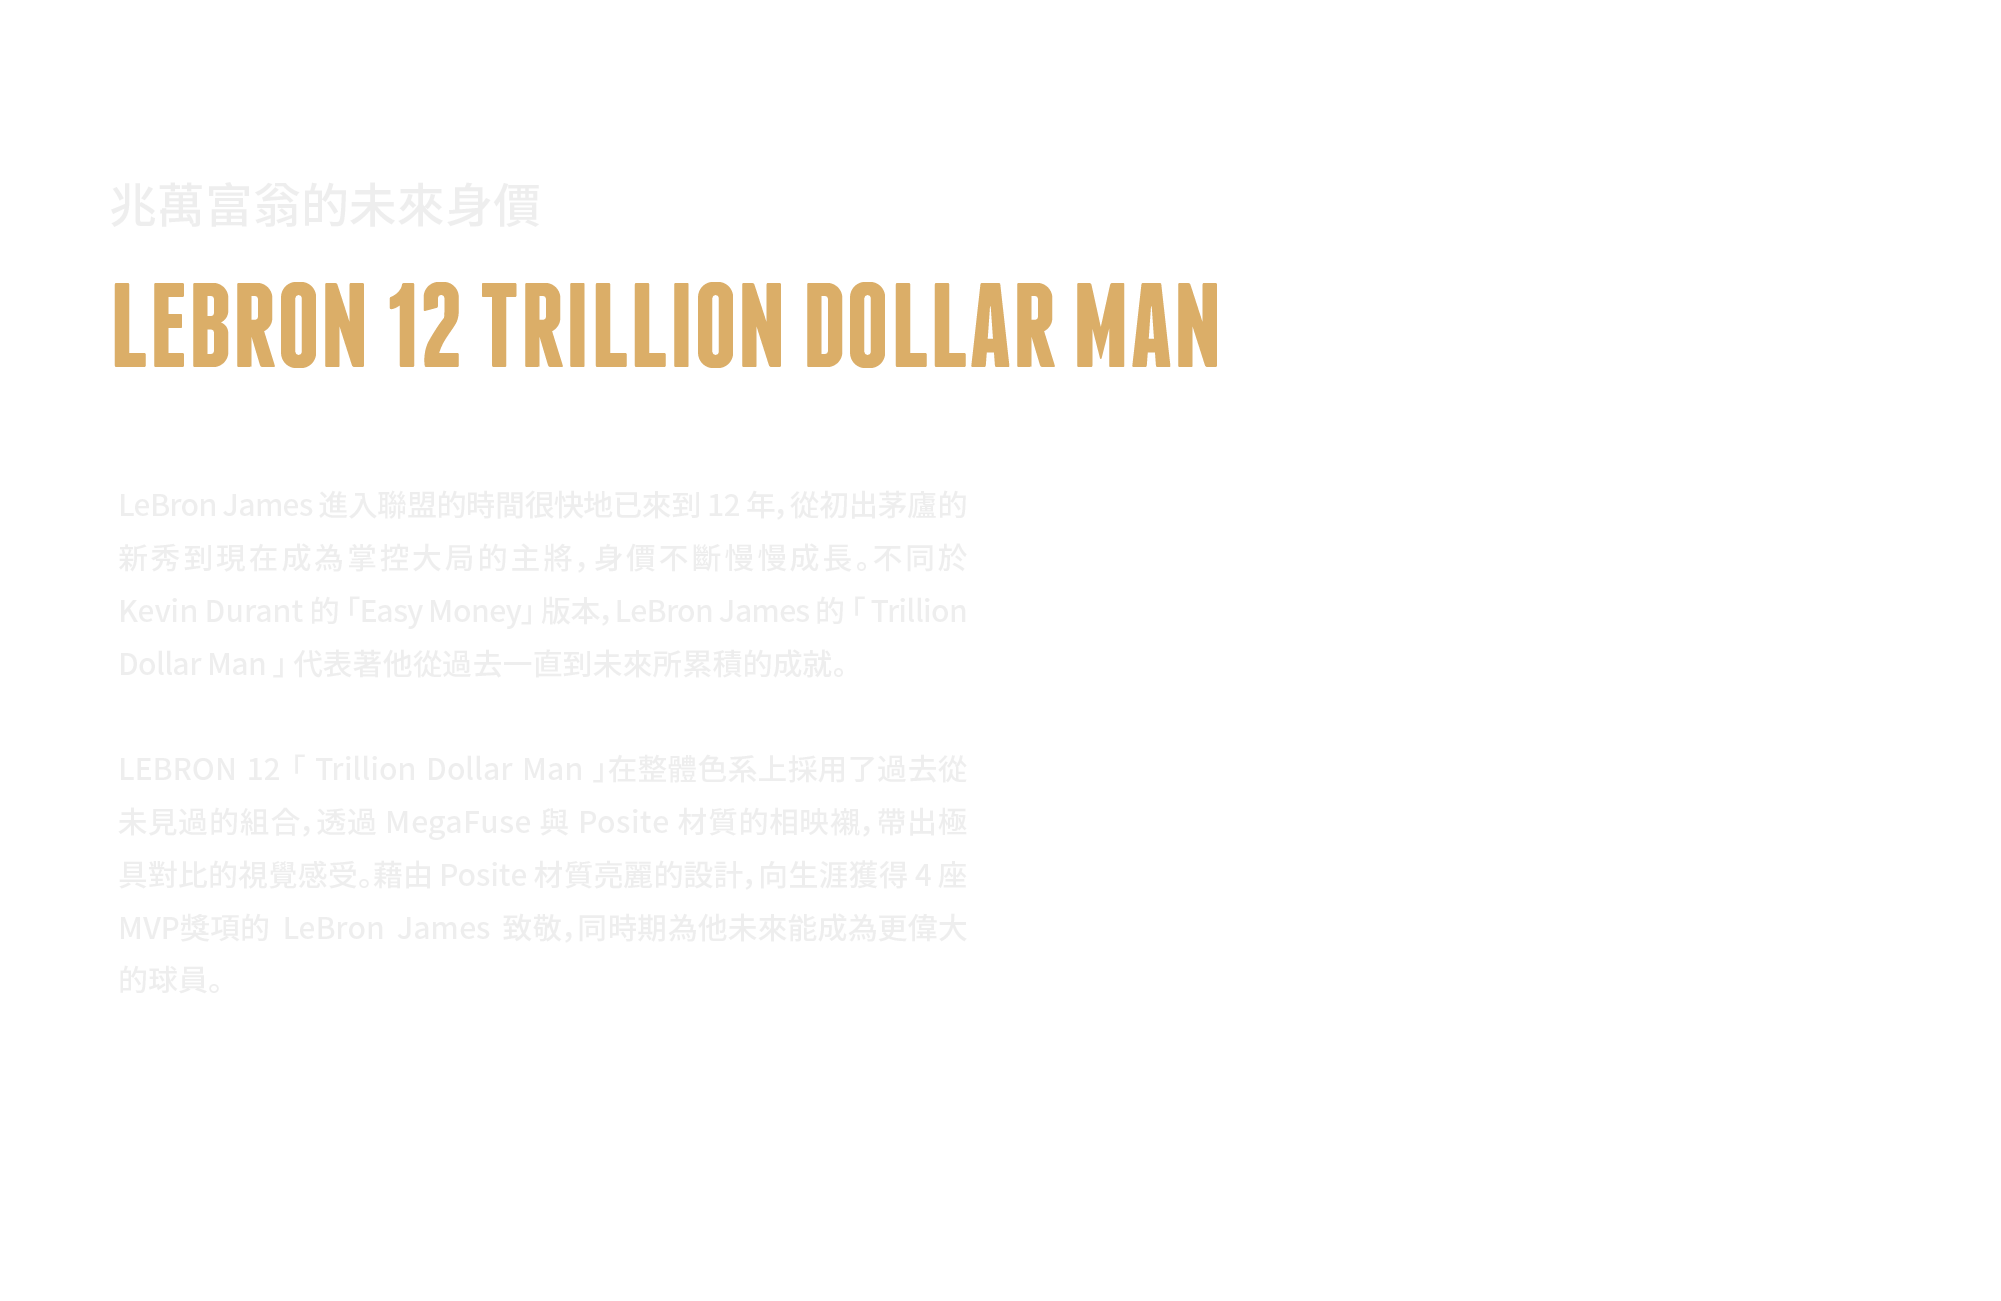 Nike LeBron 12 “Trillion Dollar Man”